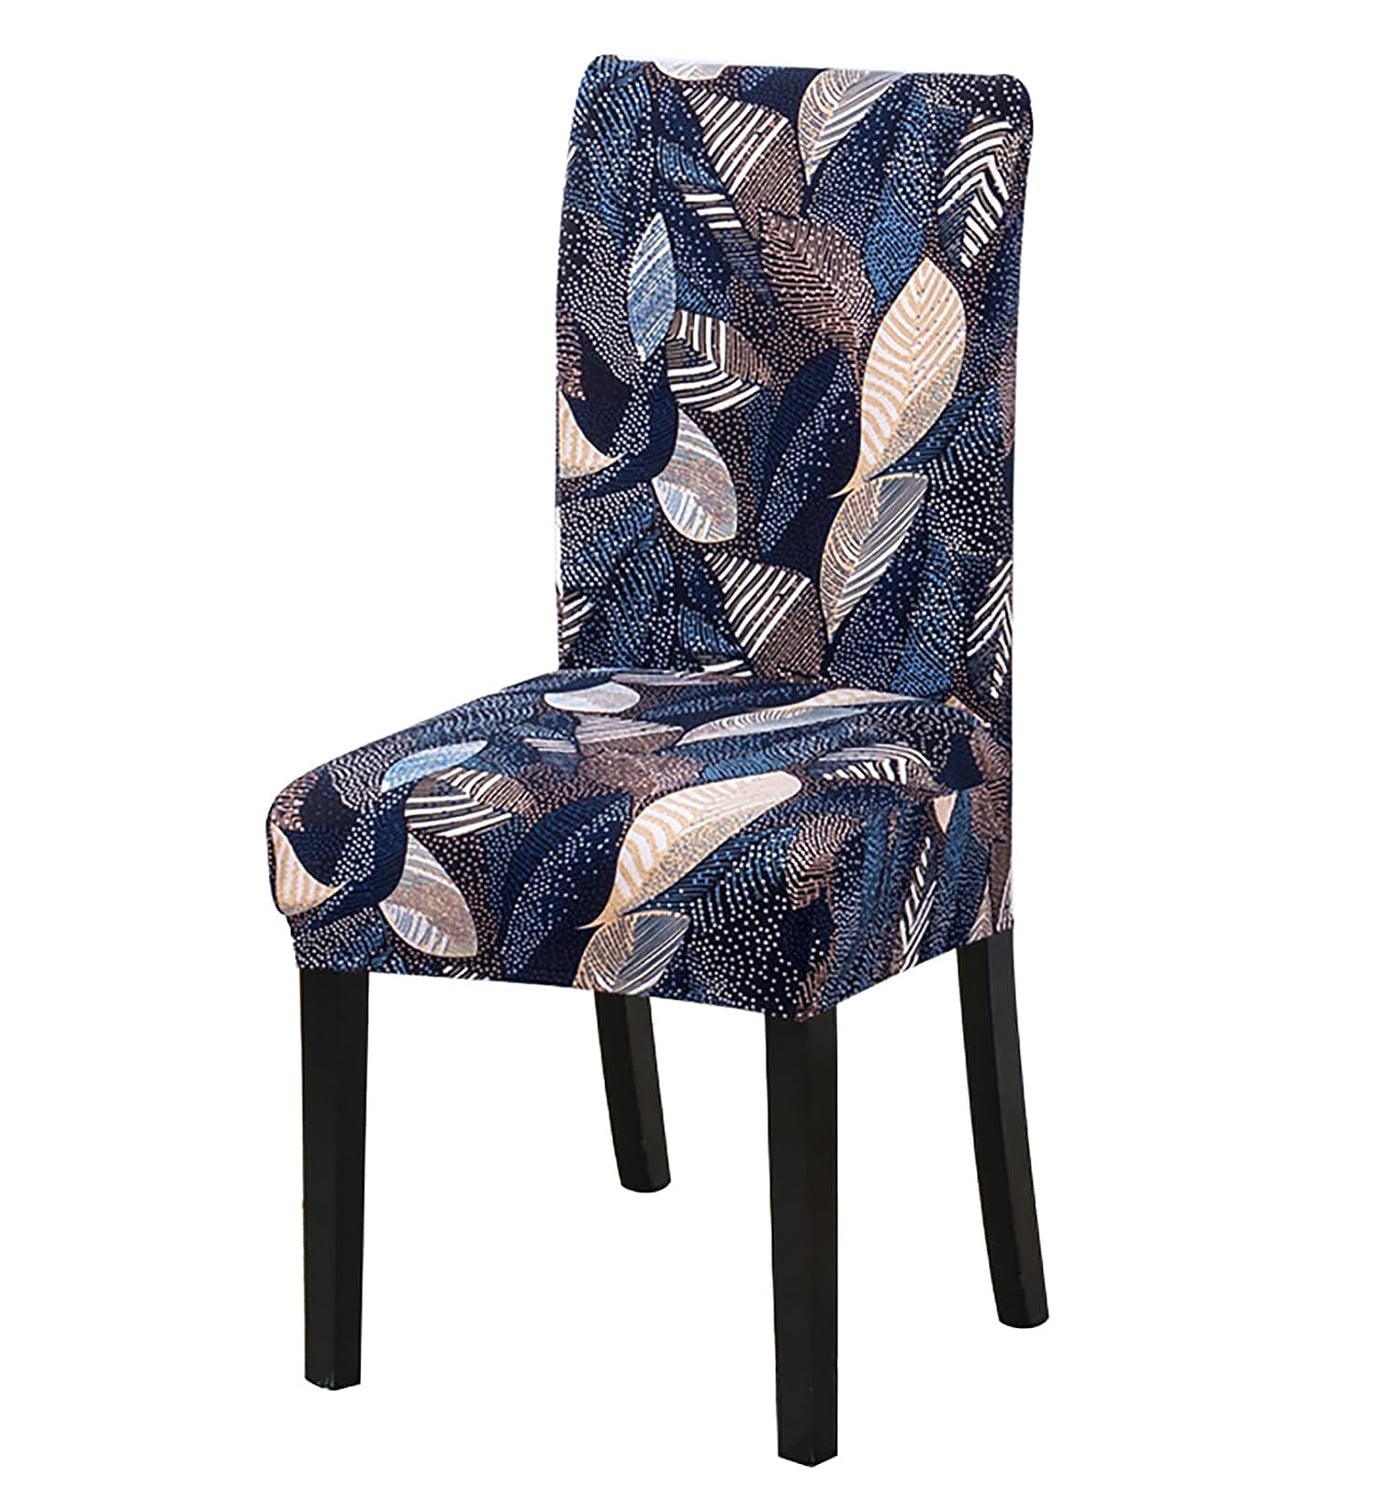 Elastic Chair Cover (Jungle Leaf)